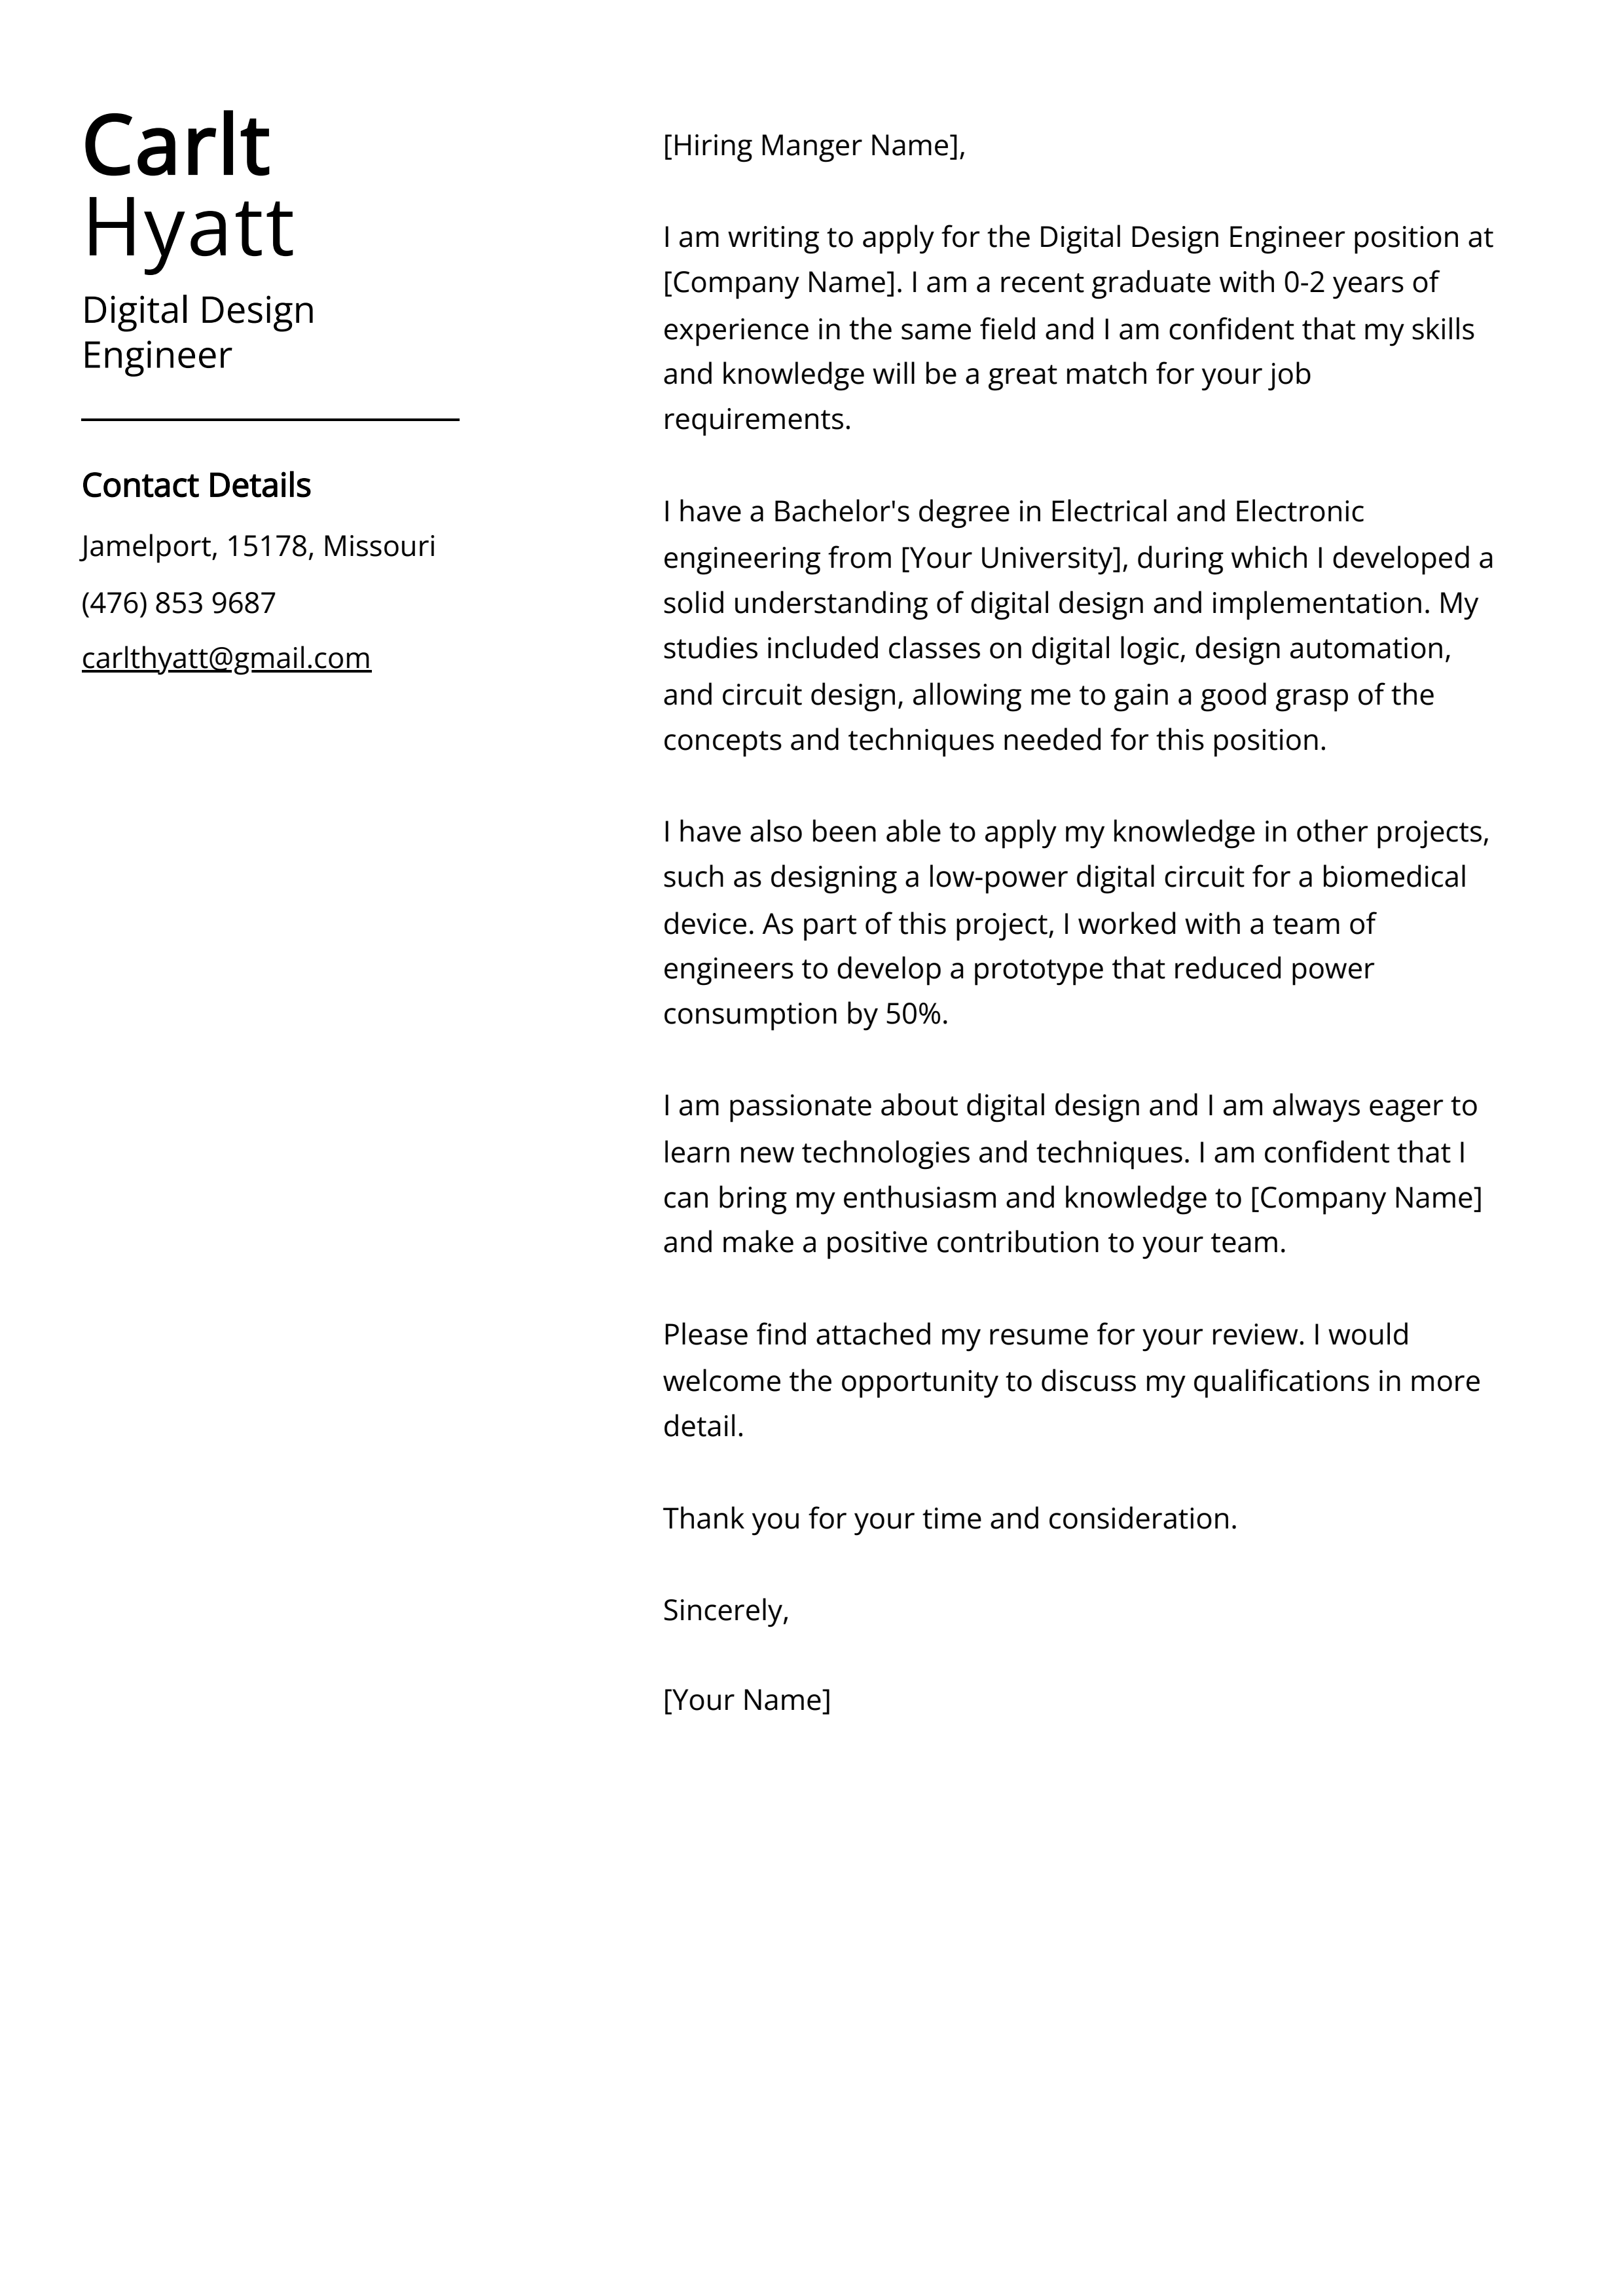 Digital Design Engineer Cover Letter Example